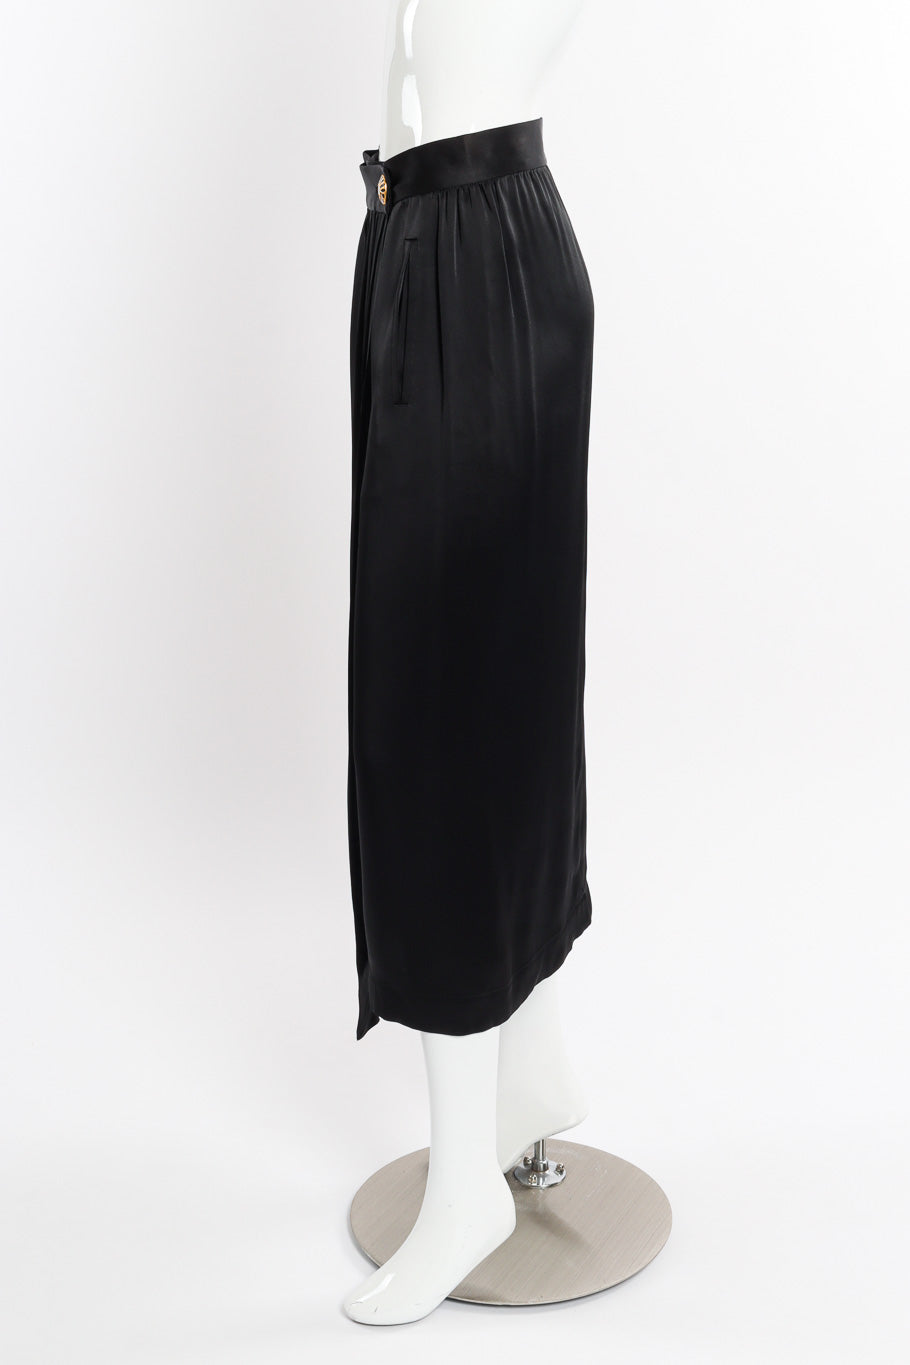 Vintage Yves Saint Laurent Wrap Midi Skirt side view on mannequin @recessla